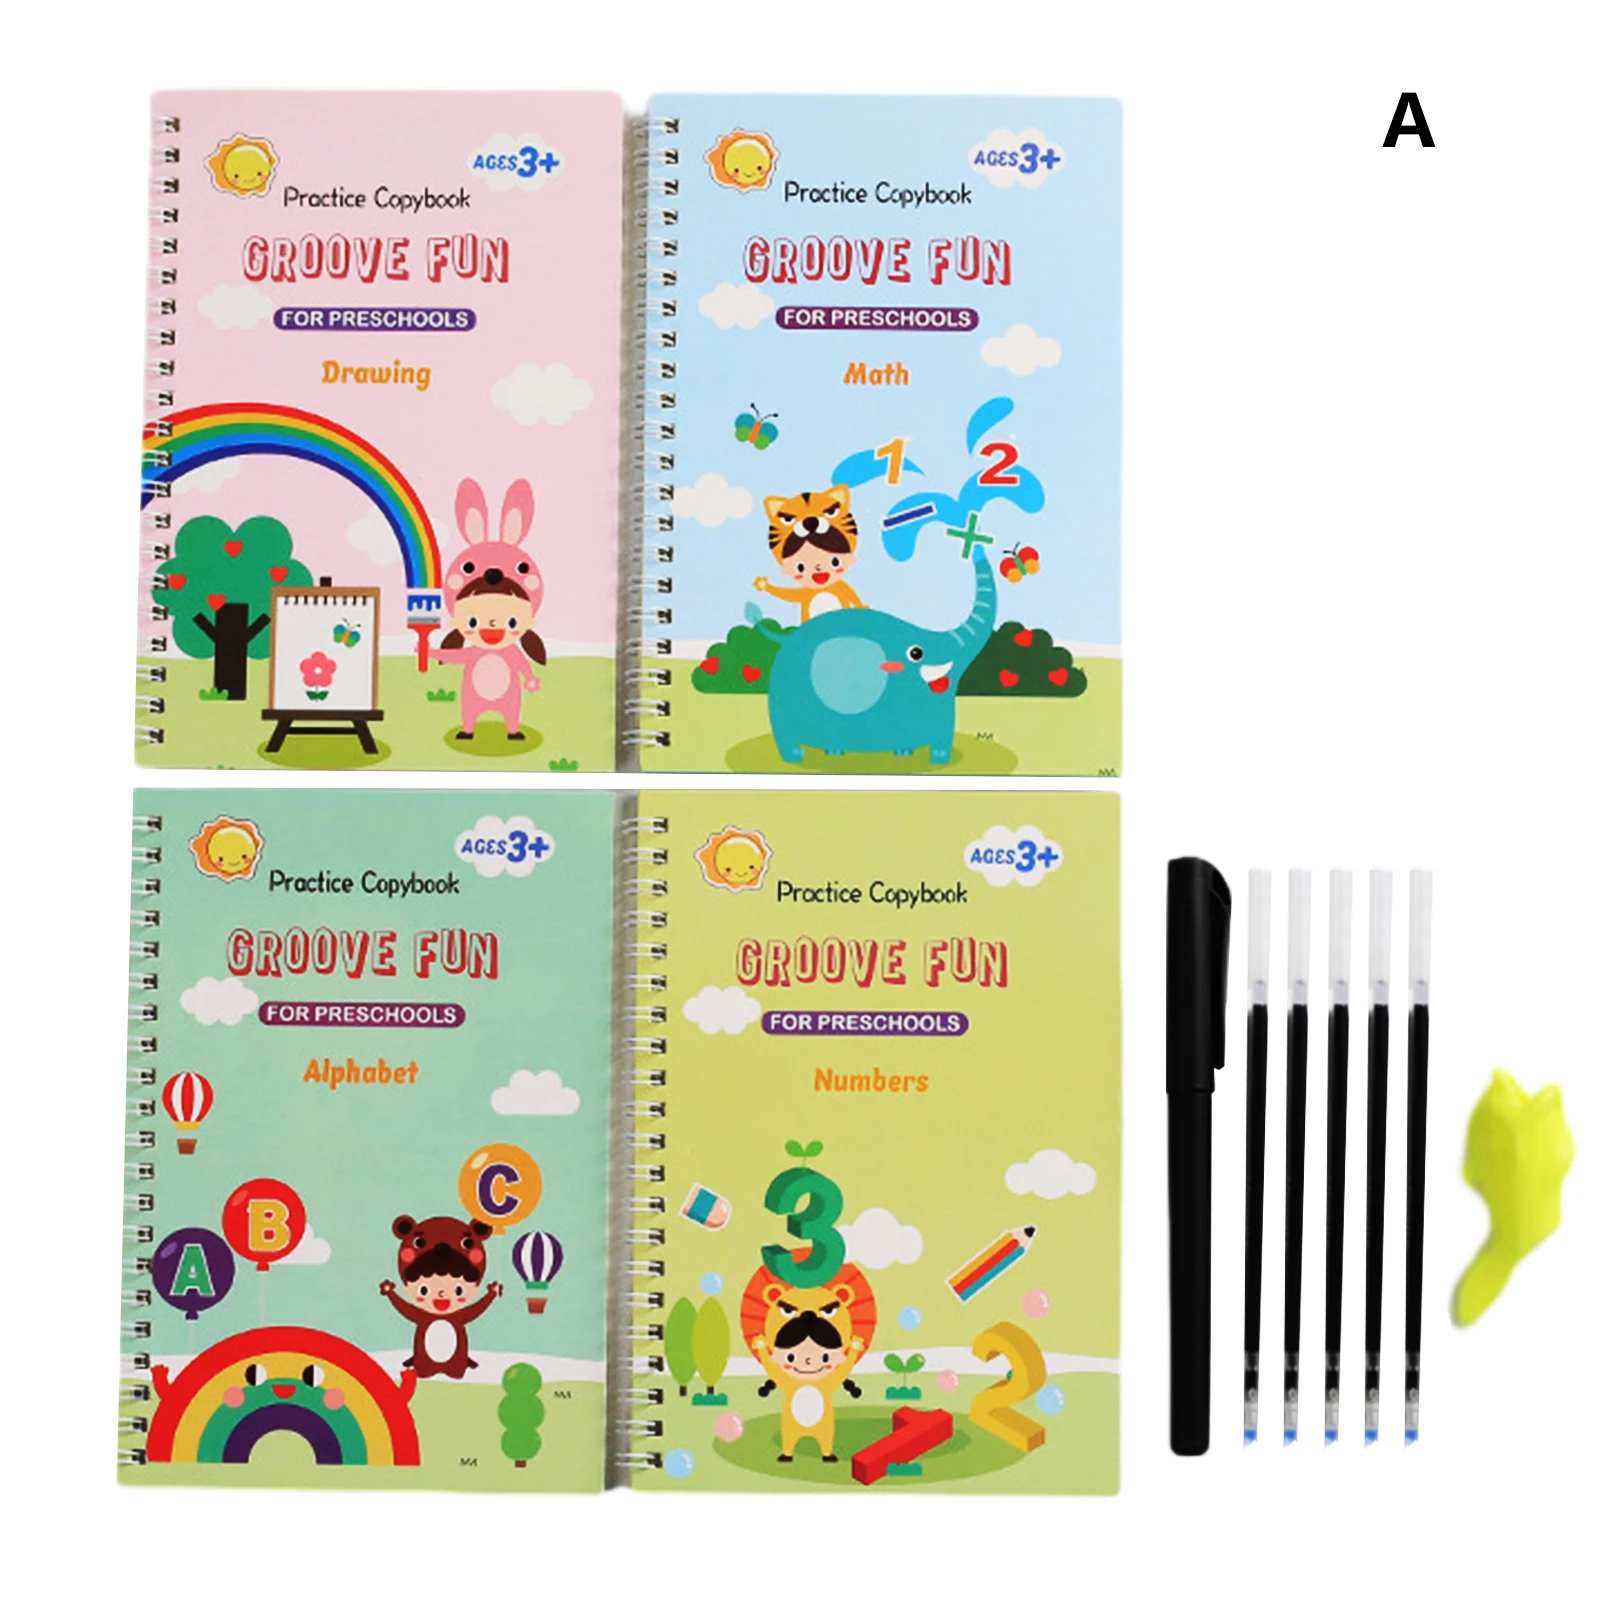 Smooth Writing Calligraphy Reusable For Kids Early Education Preschooler Kindergarten Practice Copybook Training School